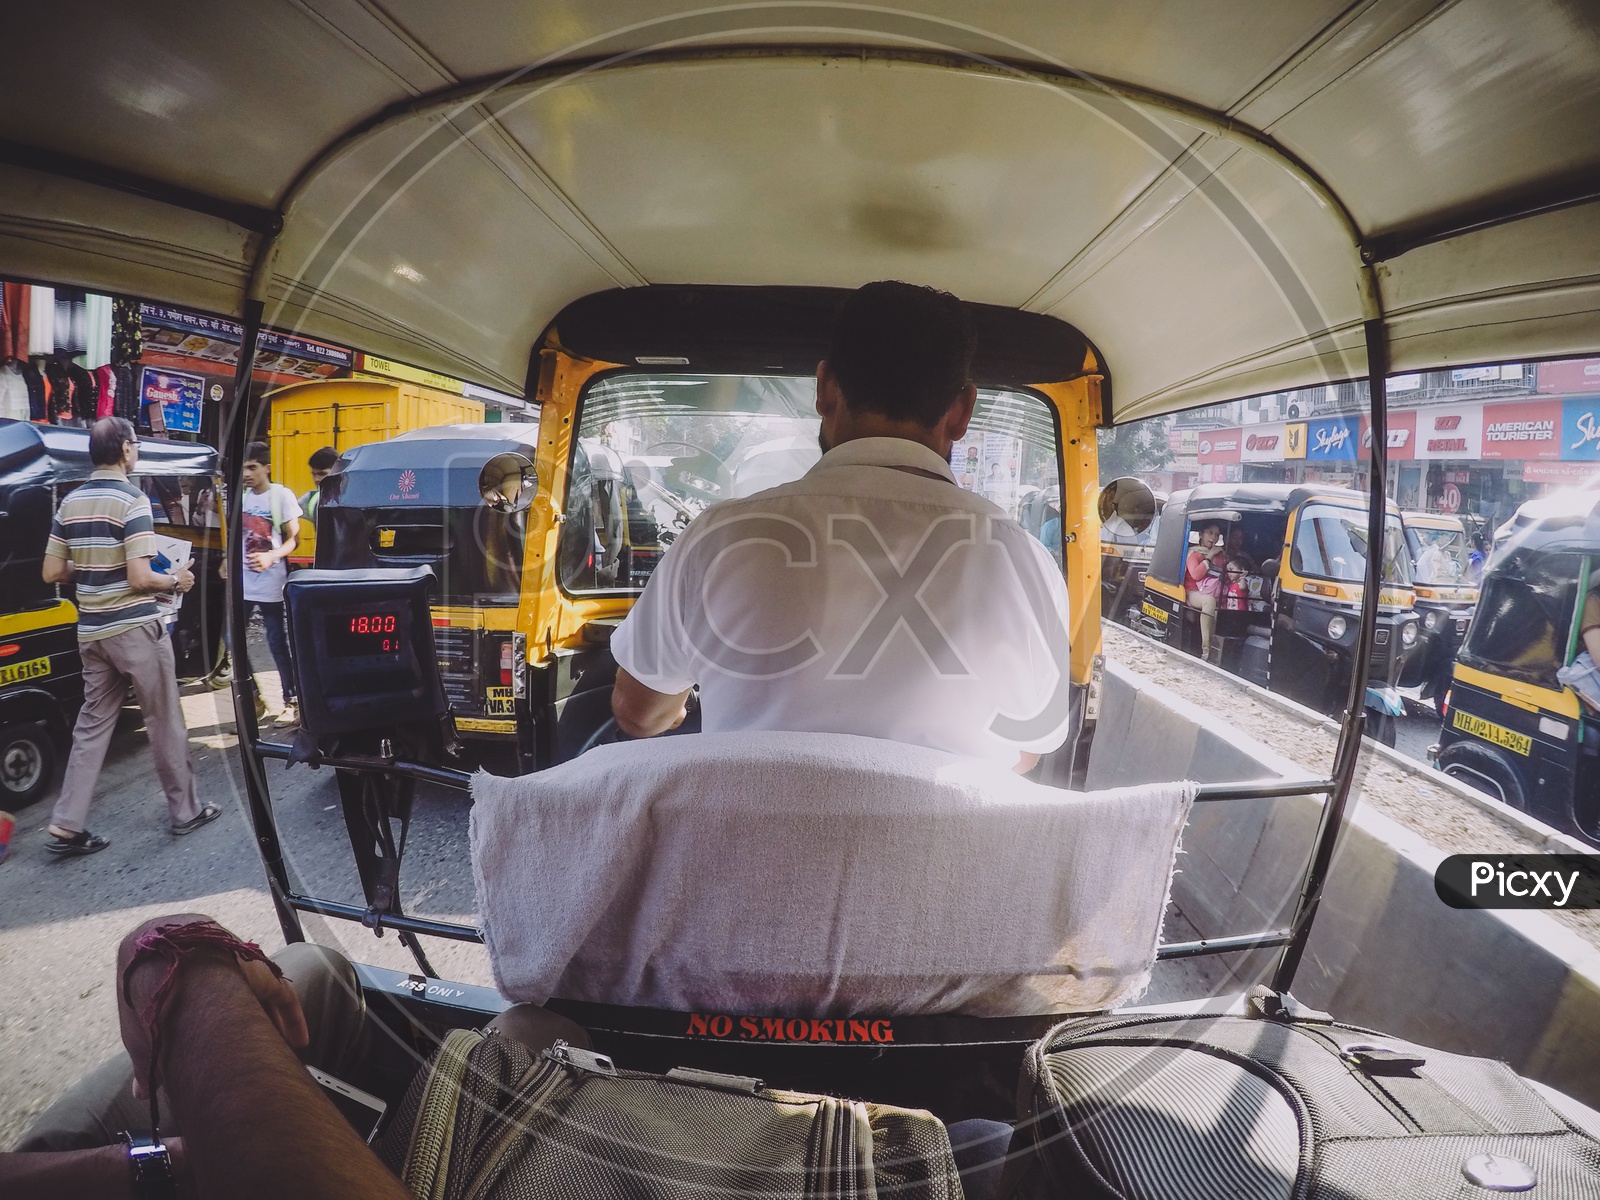 chaotic rickshaw ride!